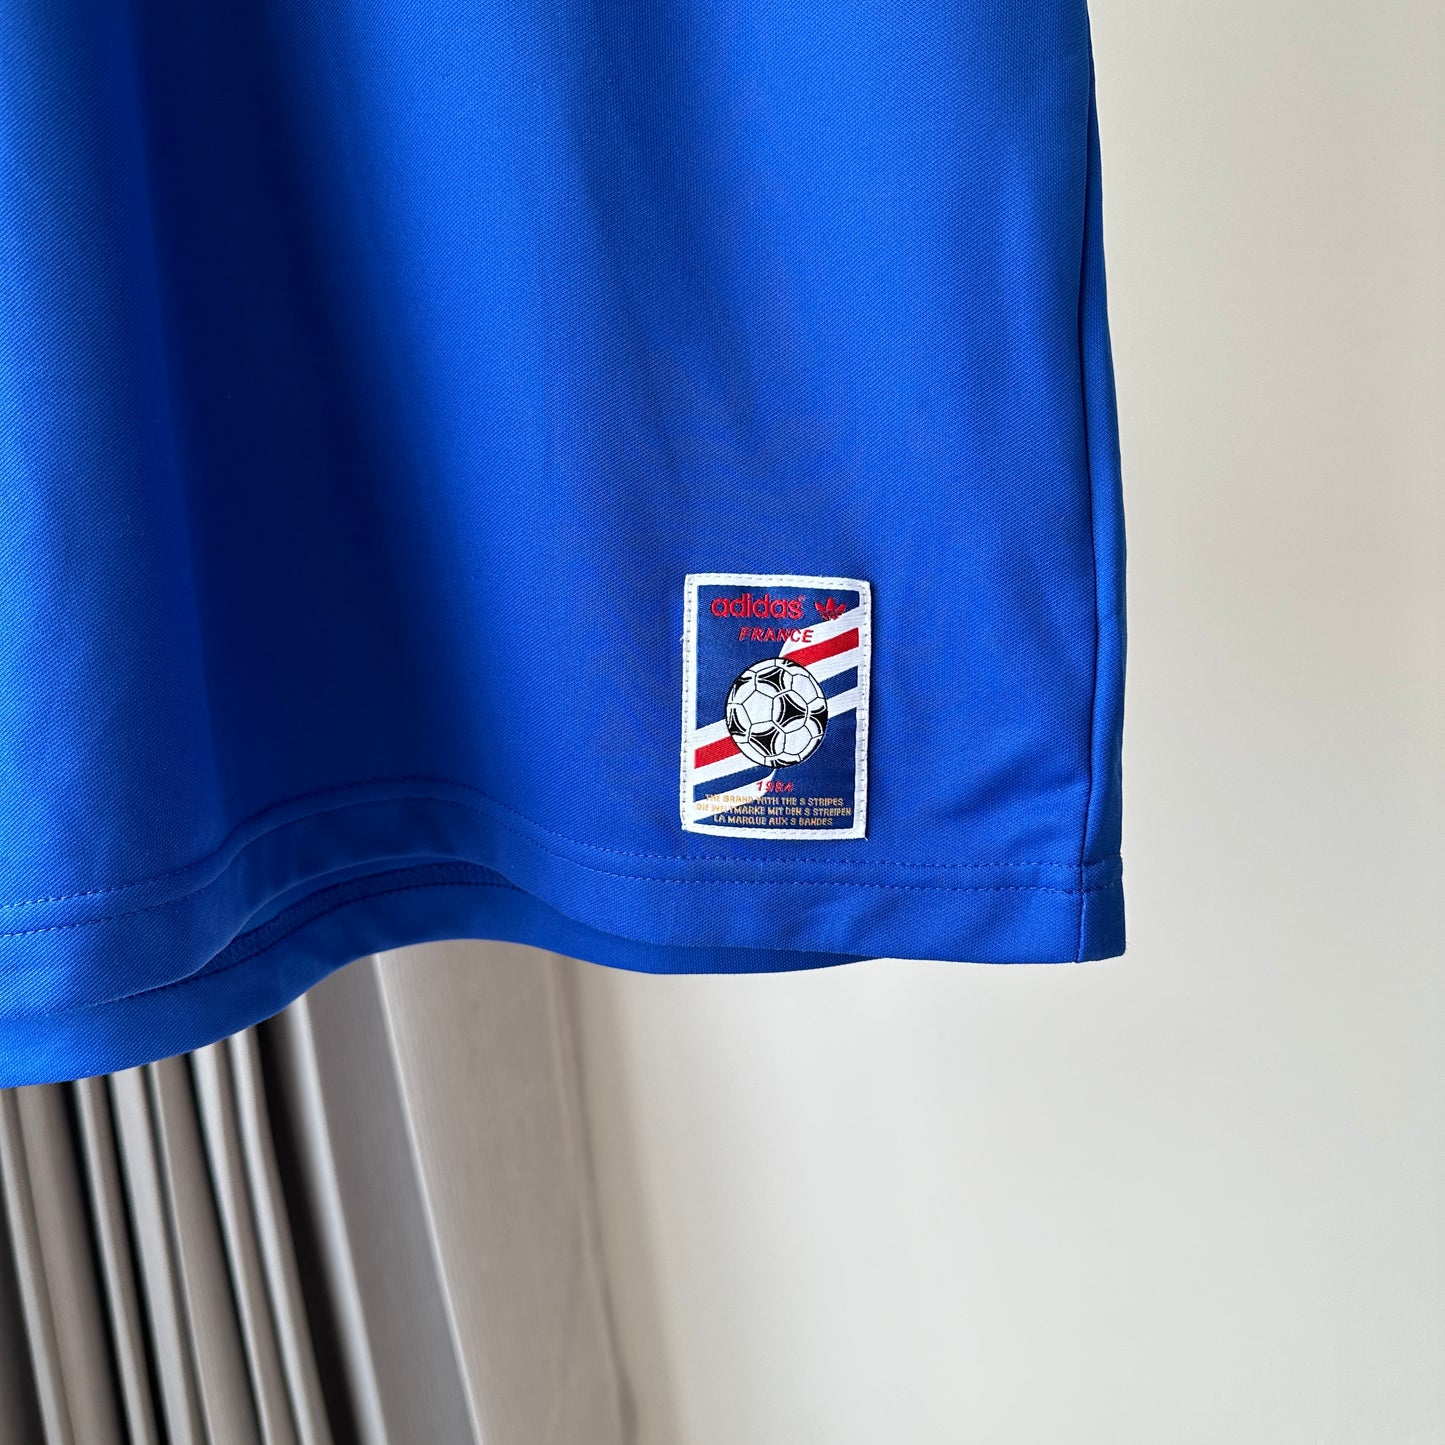 France Football team Reproduce 1984 EURO Champion x Adidas 2008 Home Jersey